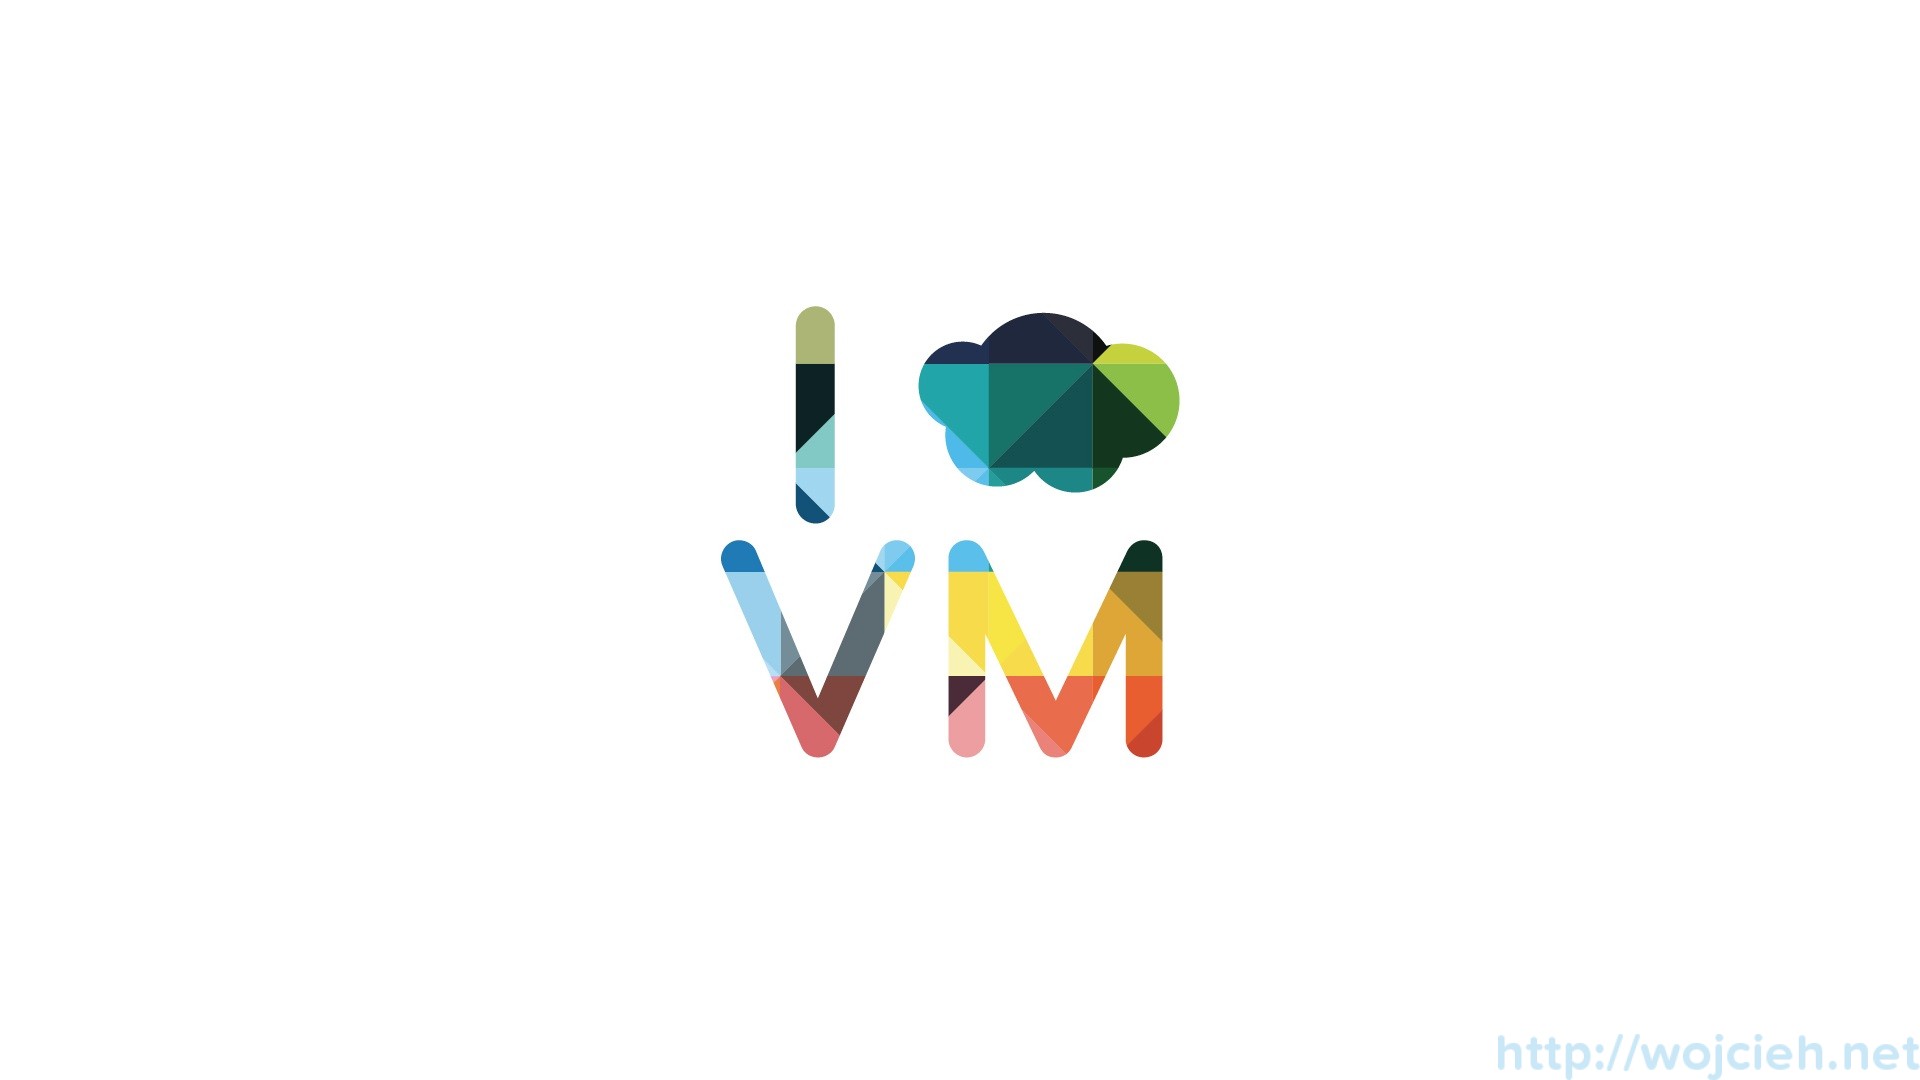 vmware wallpaper,product,logo,font,graphics,graphic design